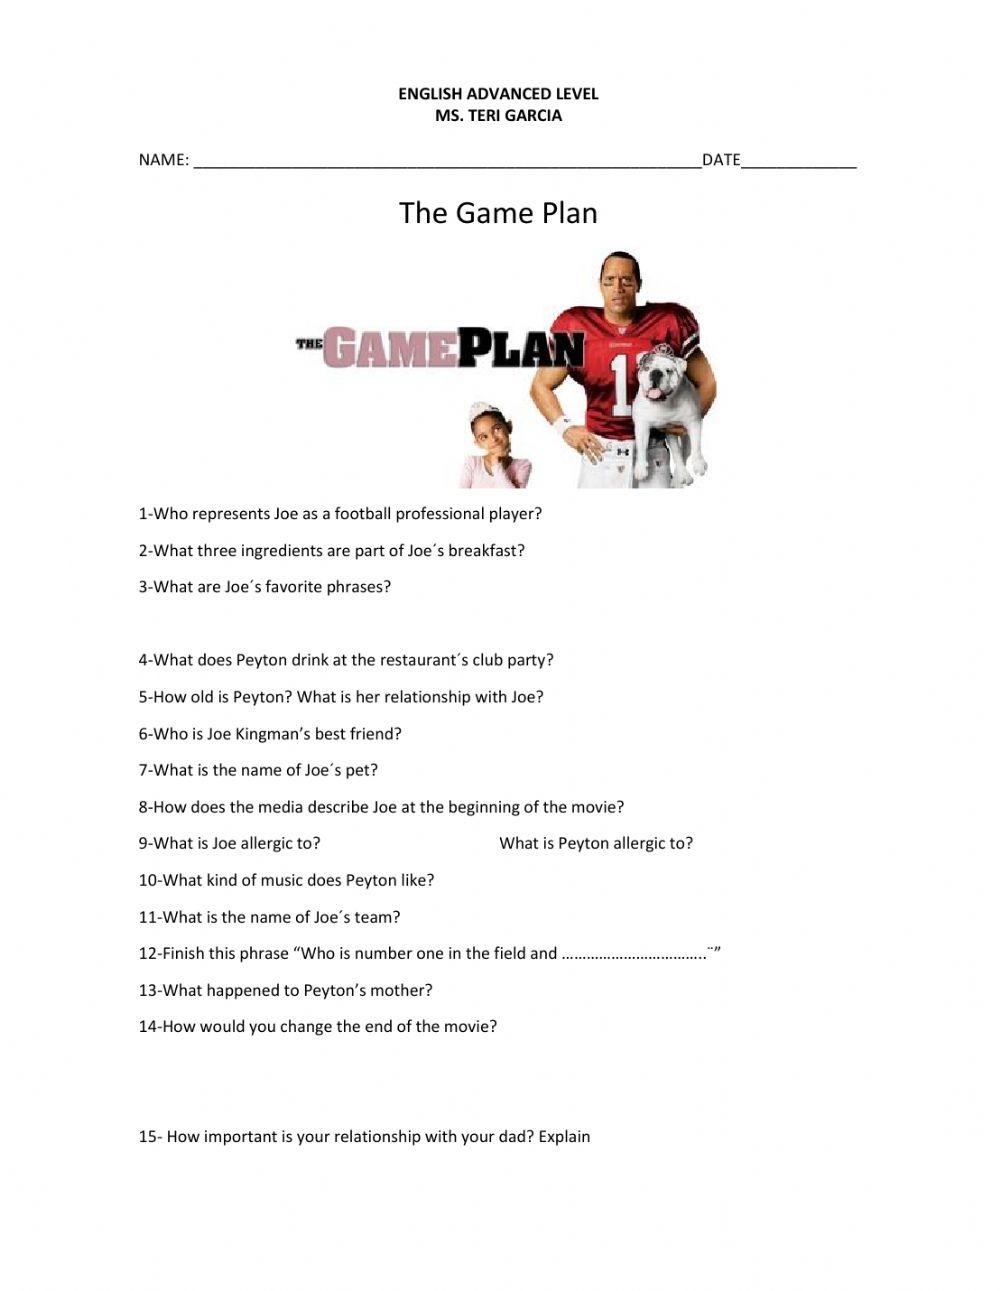 The game plan (movie)